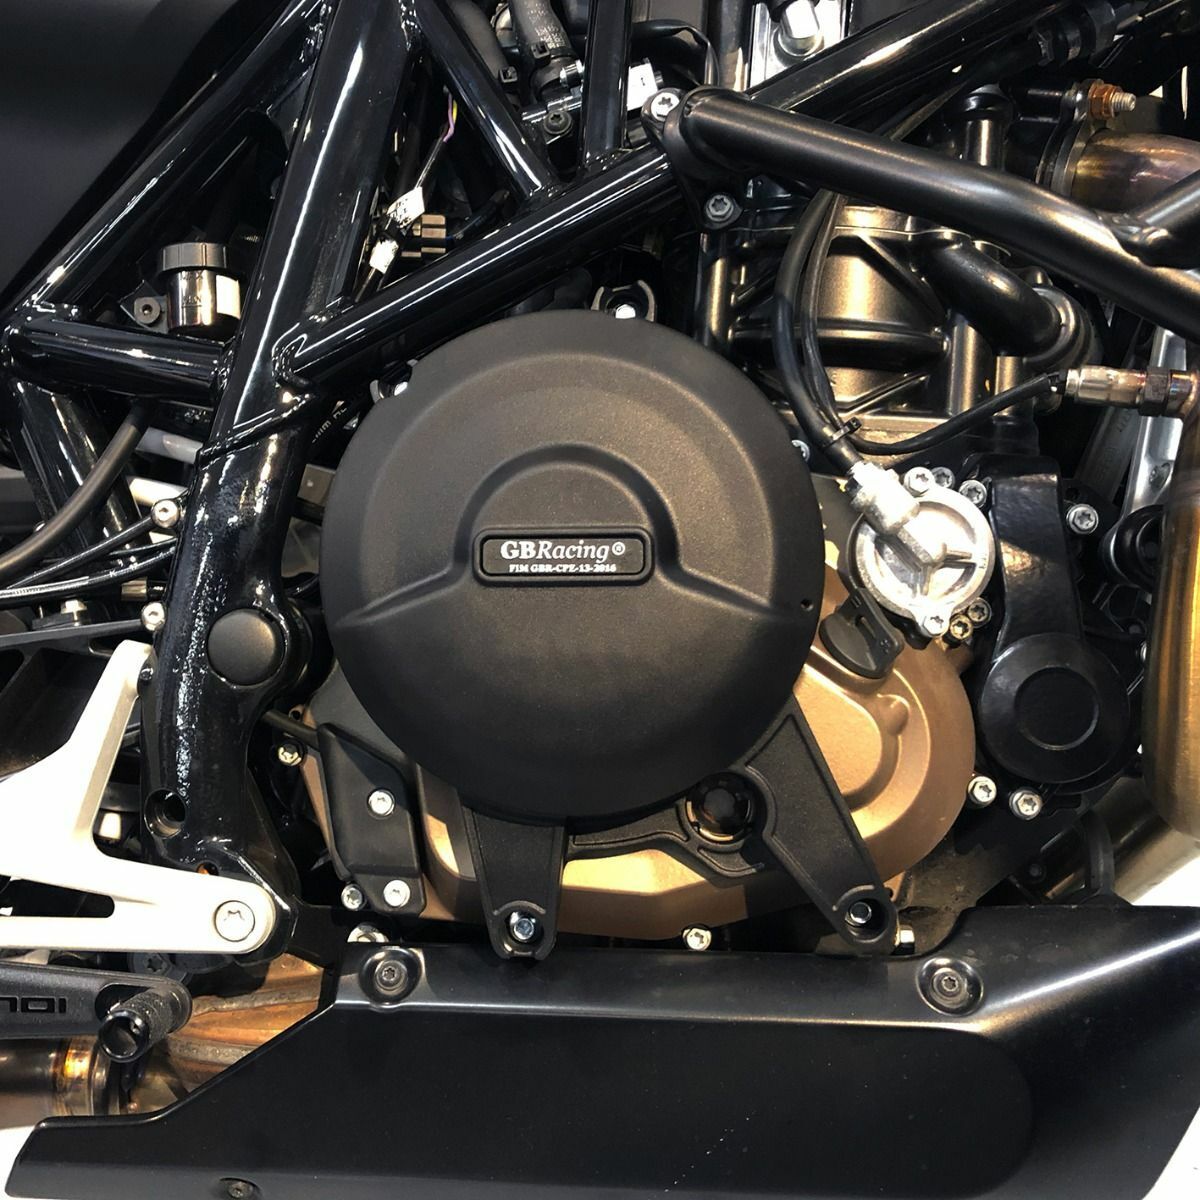 GB Racing 690 DUKE SMC ENDURO / R Engine Case Cover Slider / Protector Set KTM